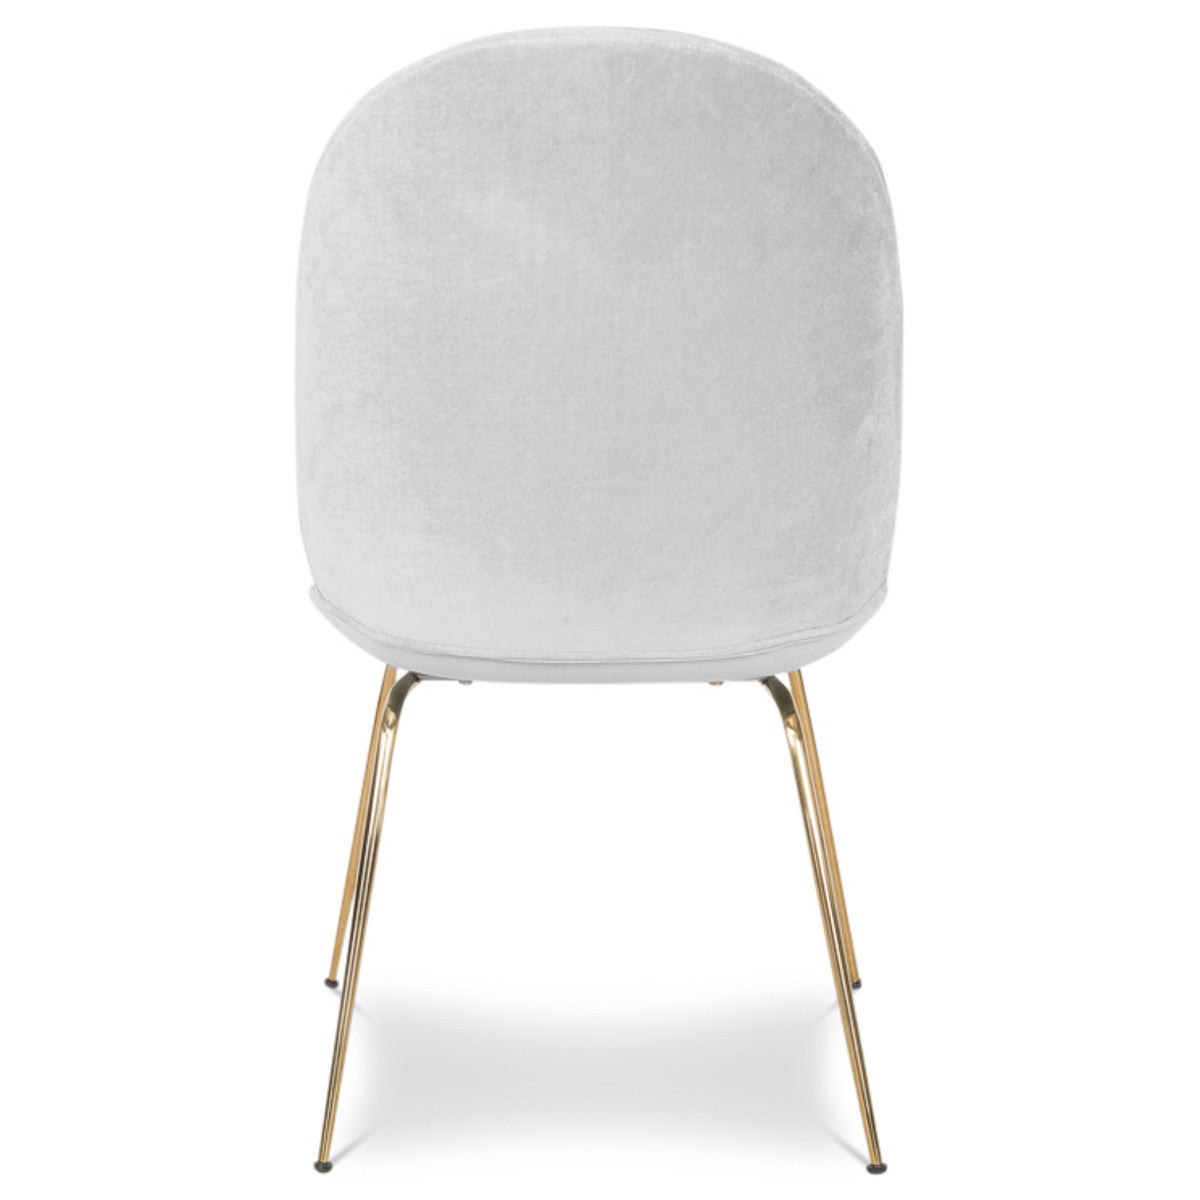 Amalfi Dining Chair in Velvet - ModShop1.com